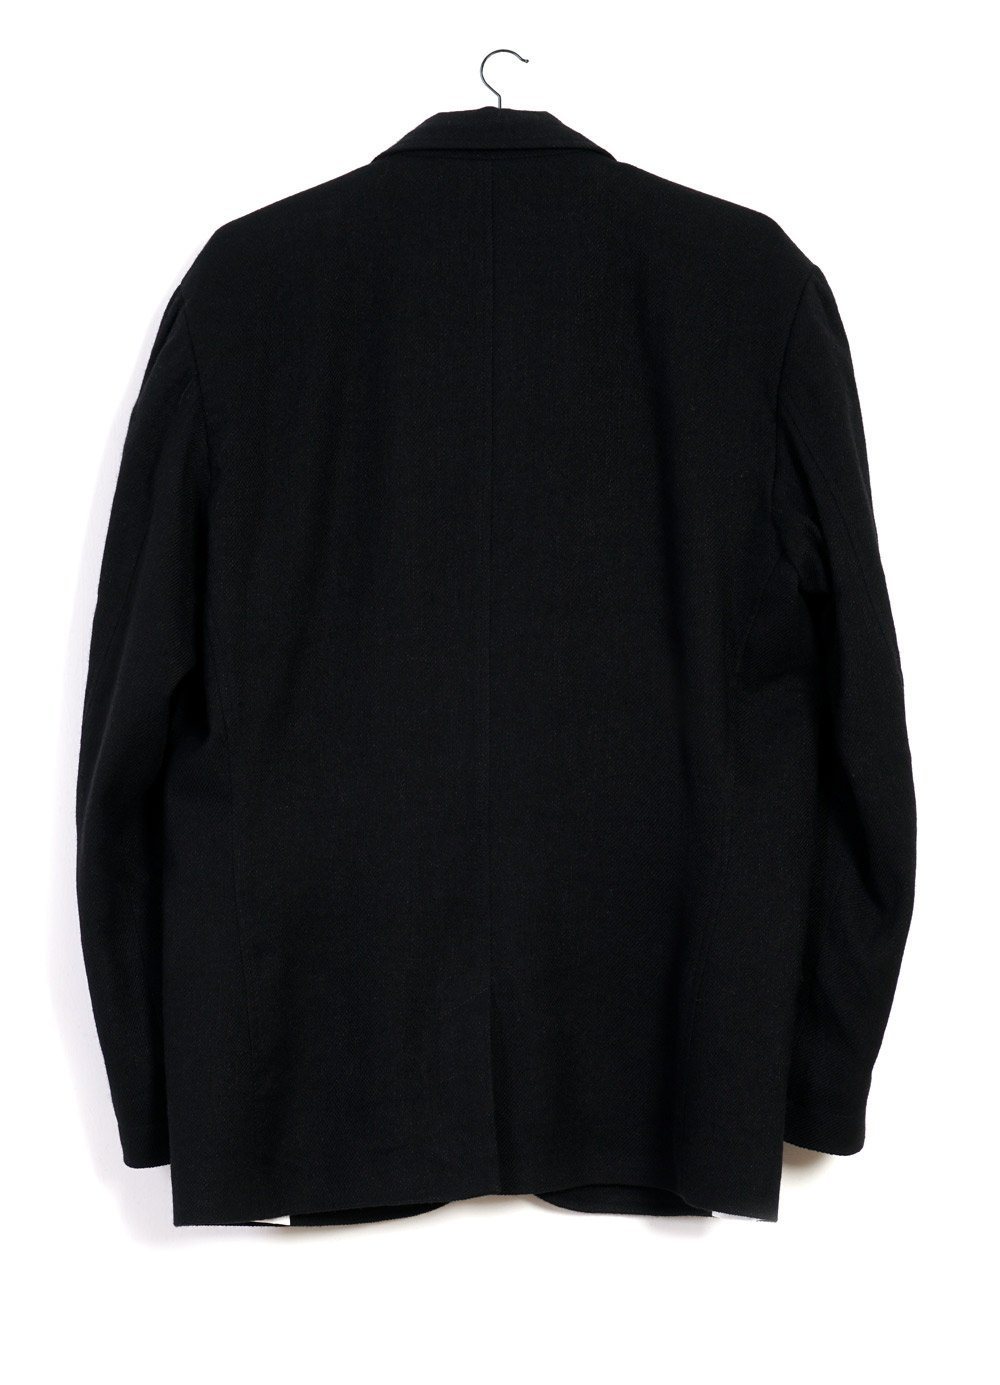 HANSEN Garments - JOHANNES | Relaxed Blazer Jacket | Black - HANSEN Garments